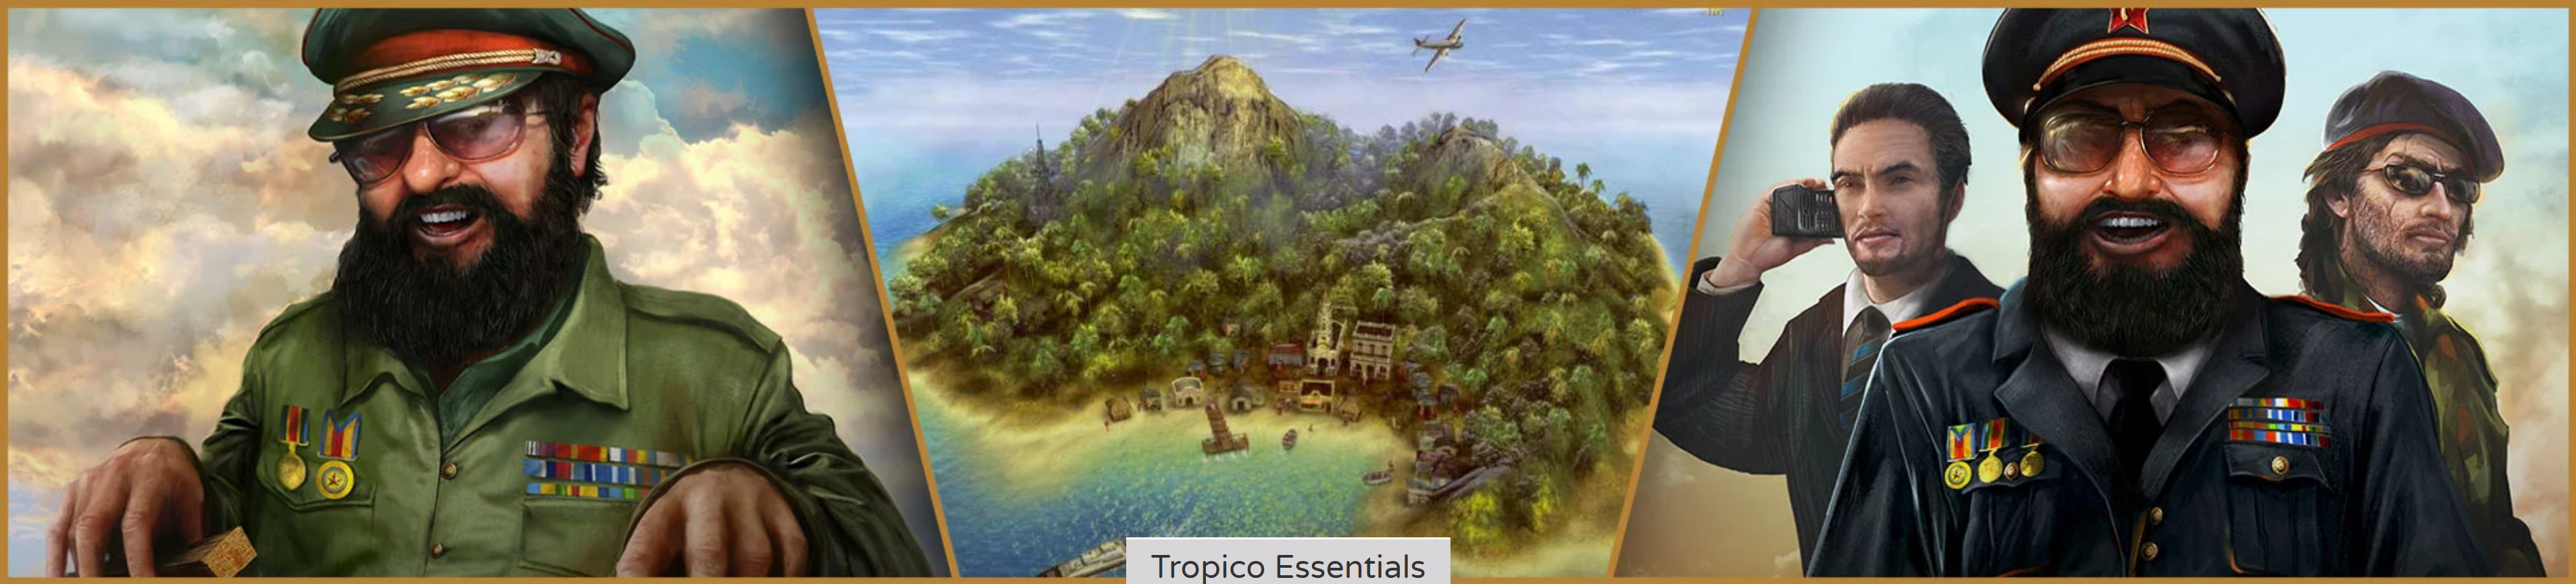 Screenshot_2019-08-15 Tropico Essentials Bundle, Easy as 1,2,3 4.jpg